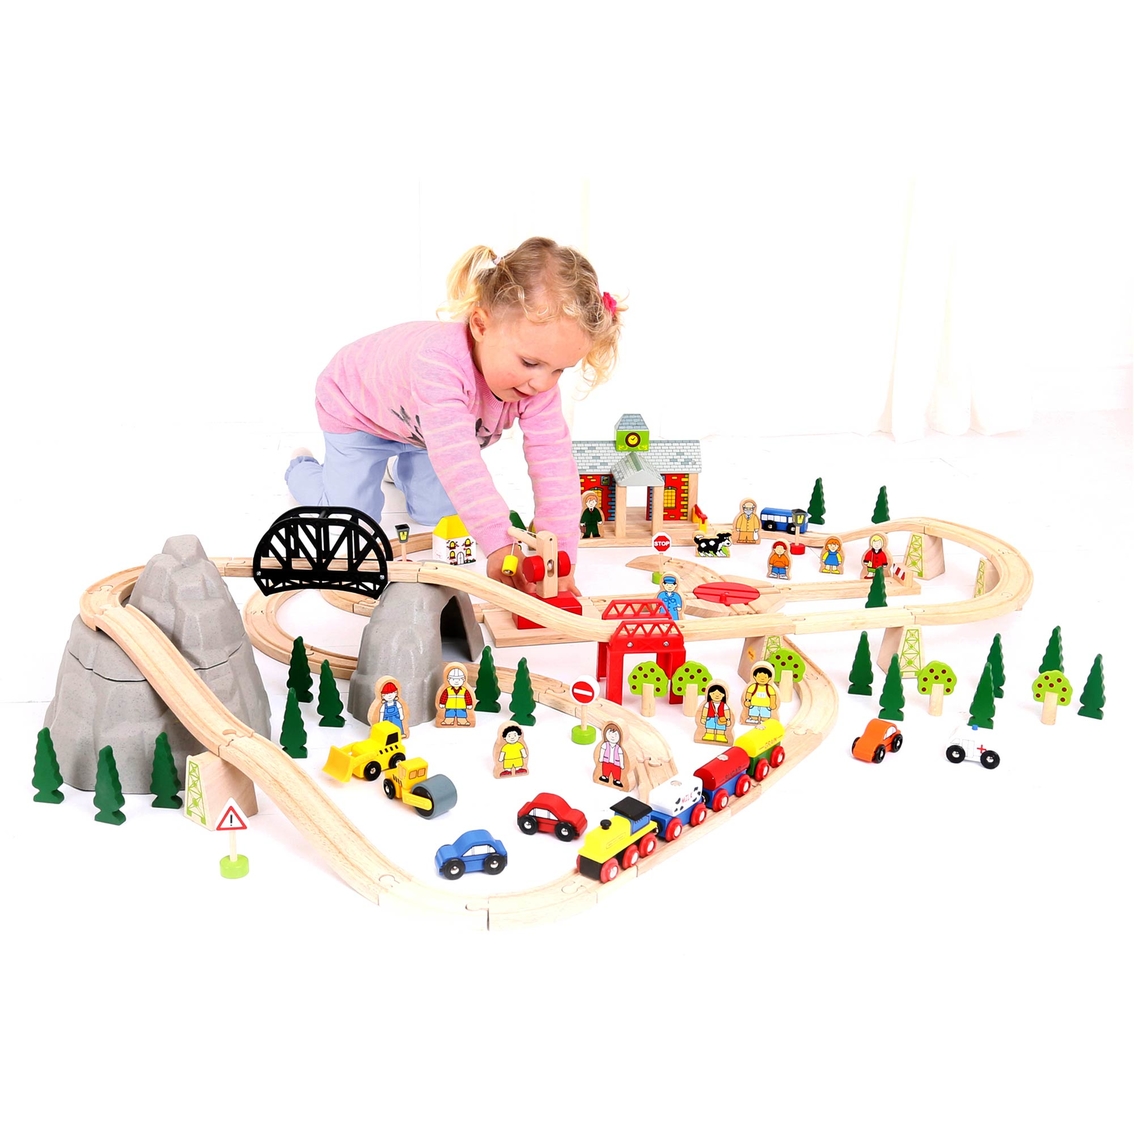 BigJigs Toys Mountain Railway Set - Image 2 of 2